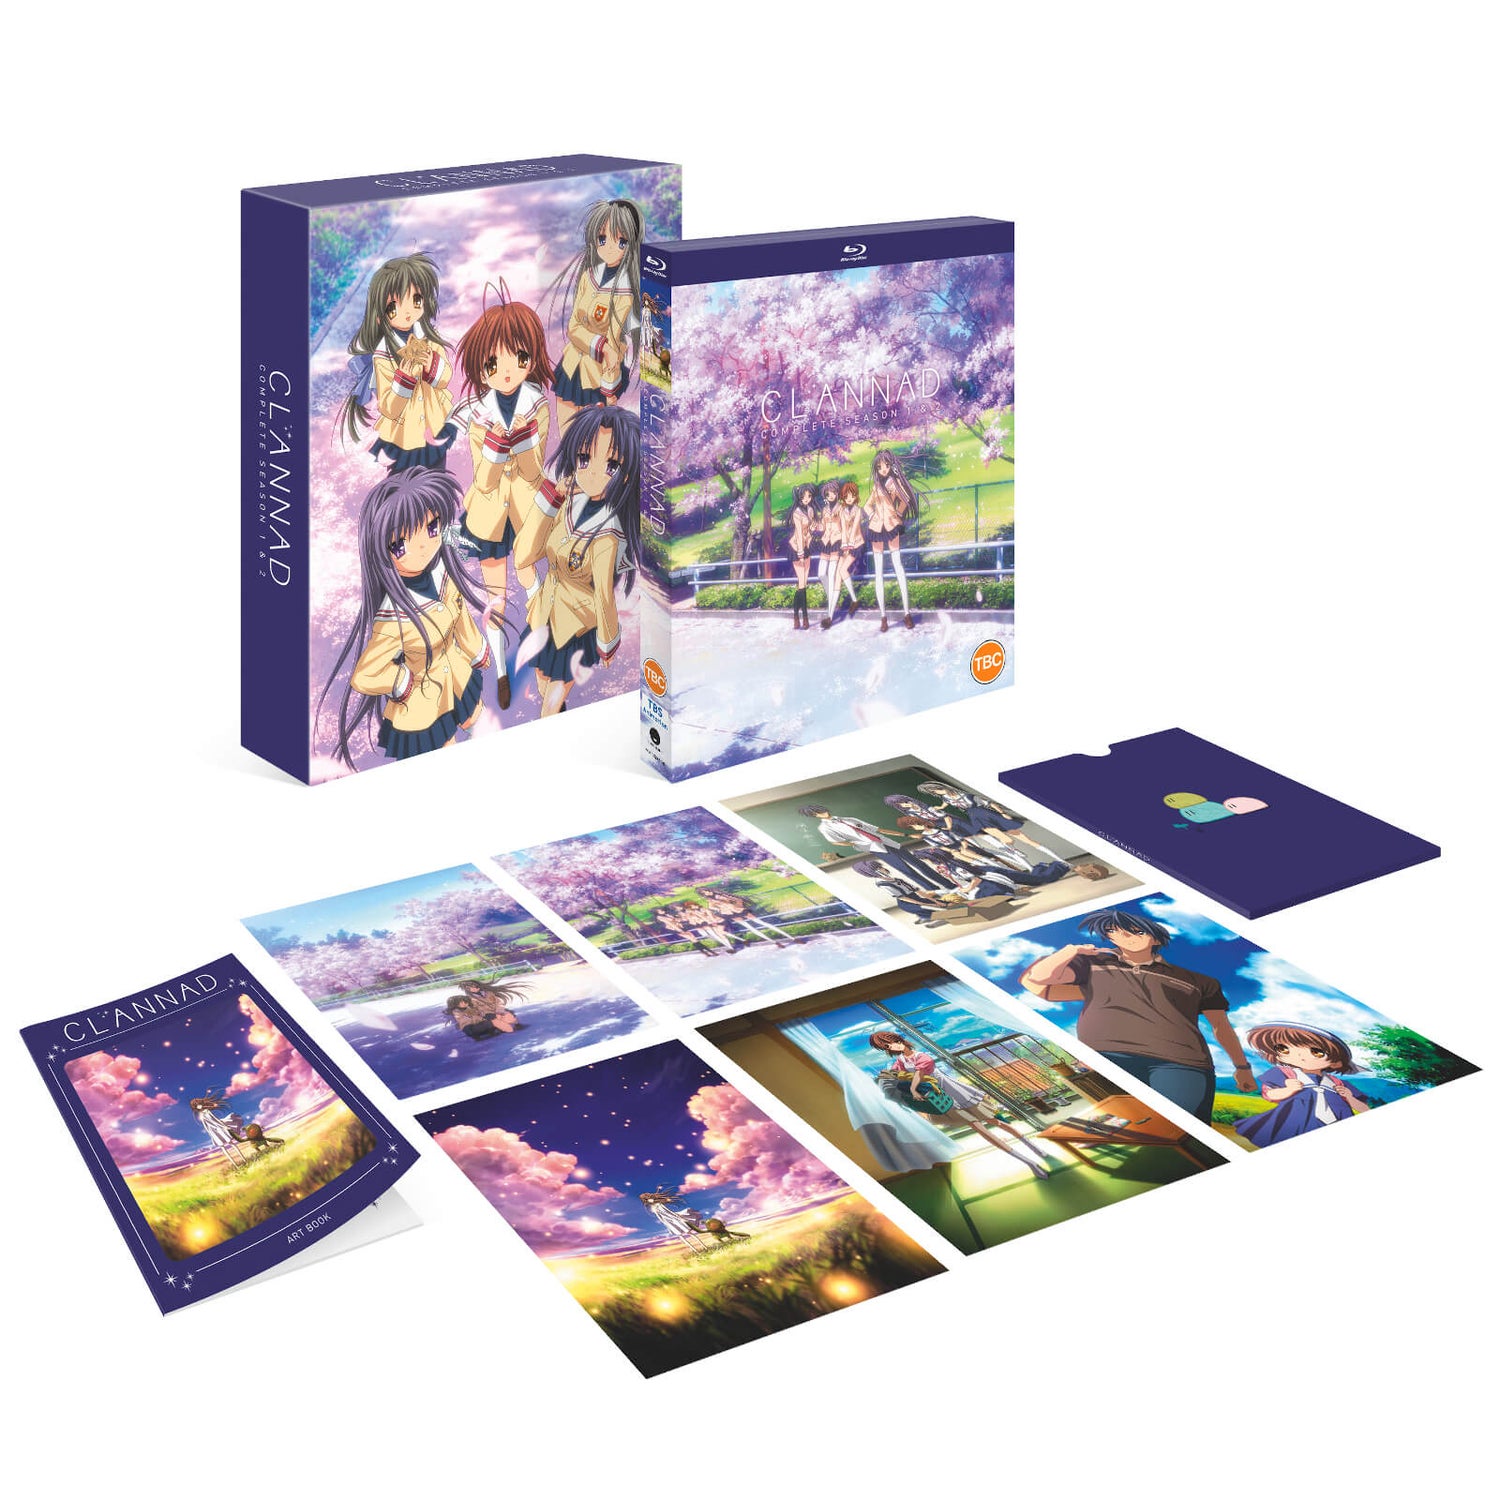 Clannad & Clannad After Story Collection complète - Édition limitée